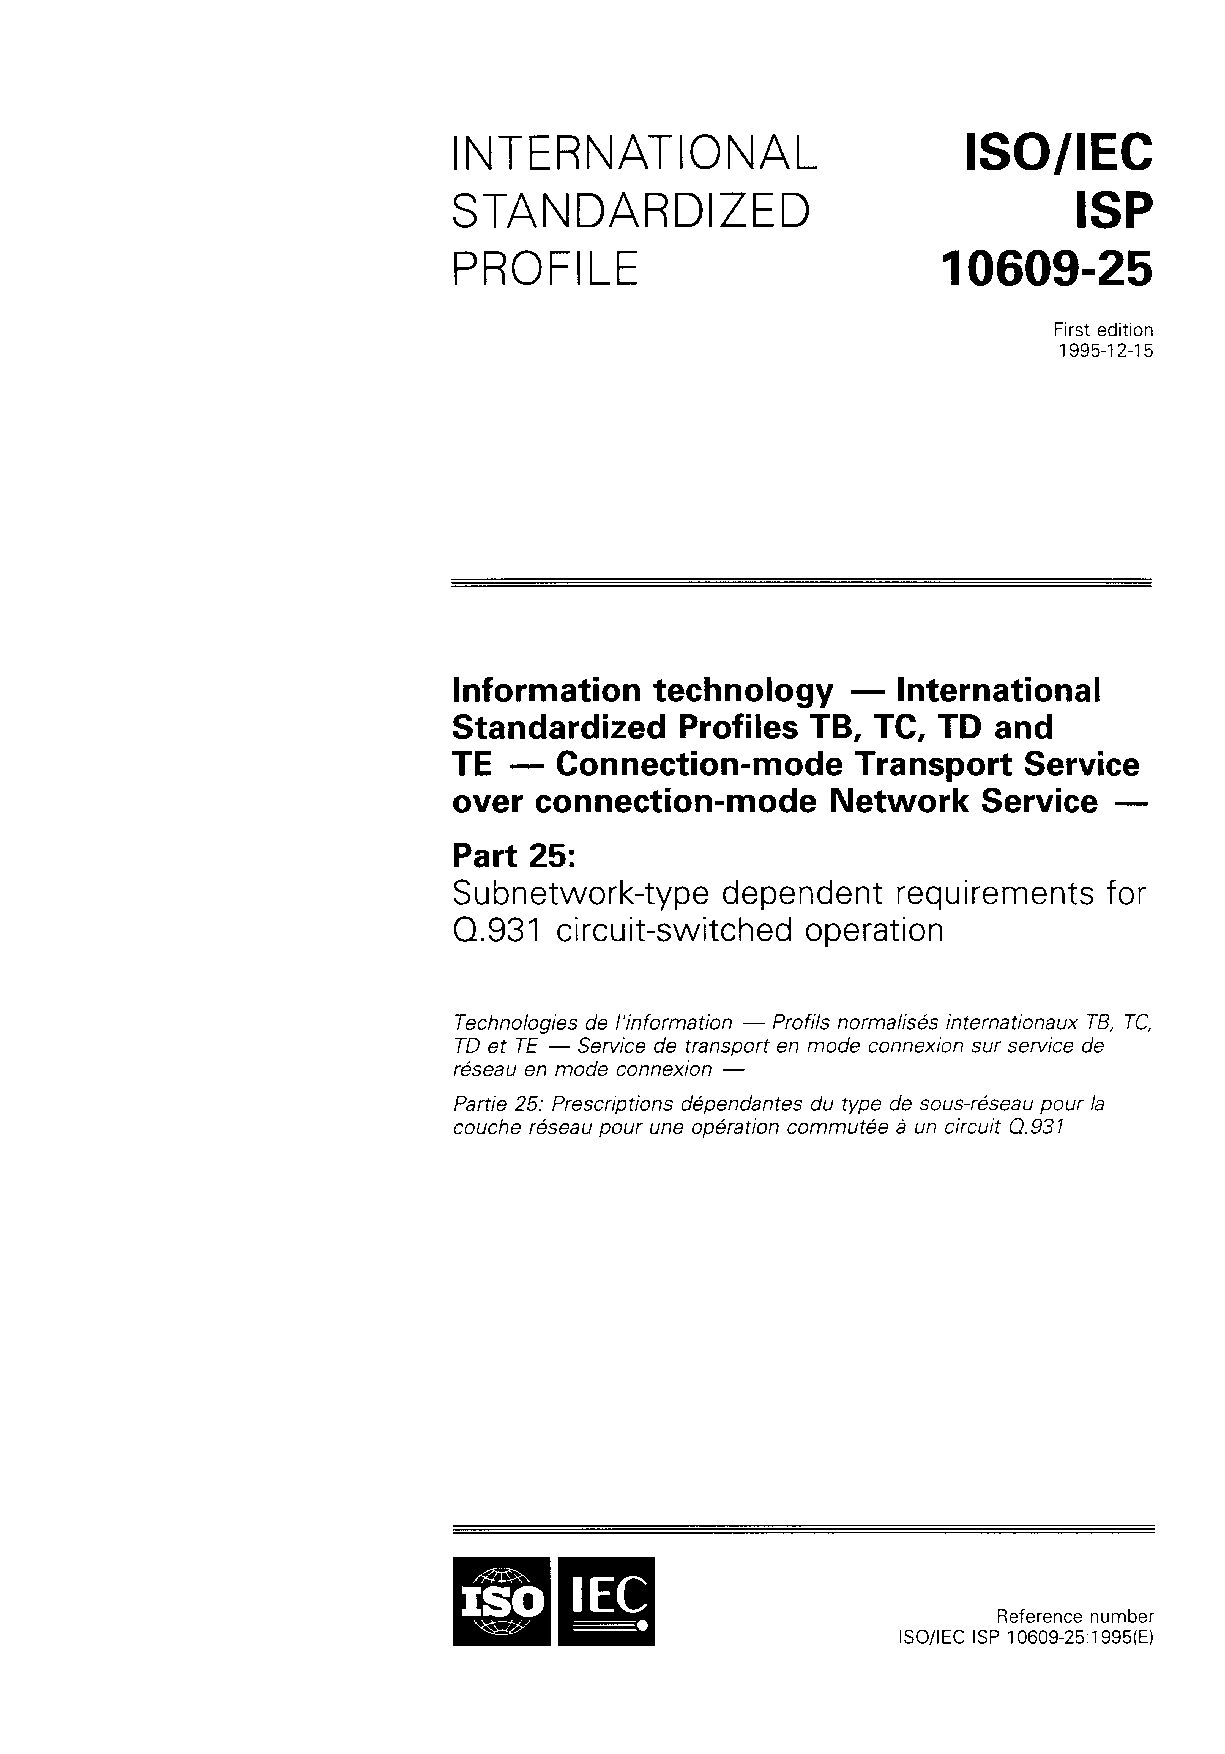 ISO/IEC ISP 10609-25:1995